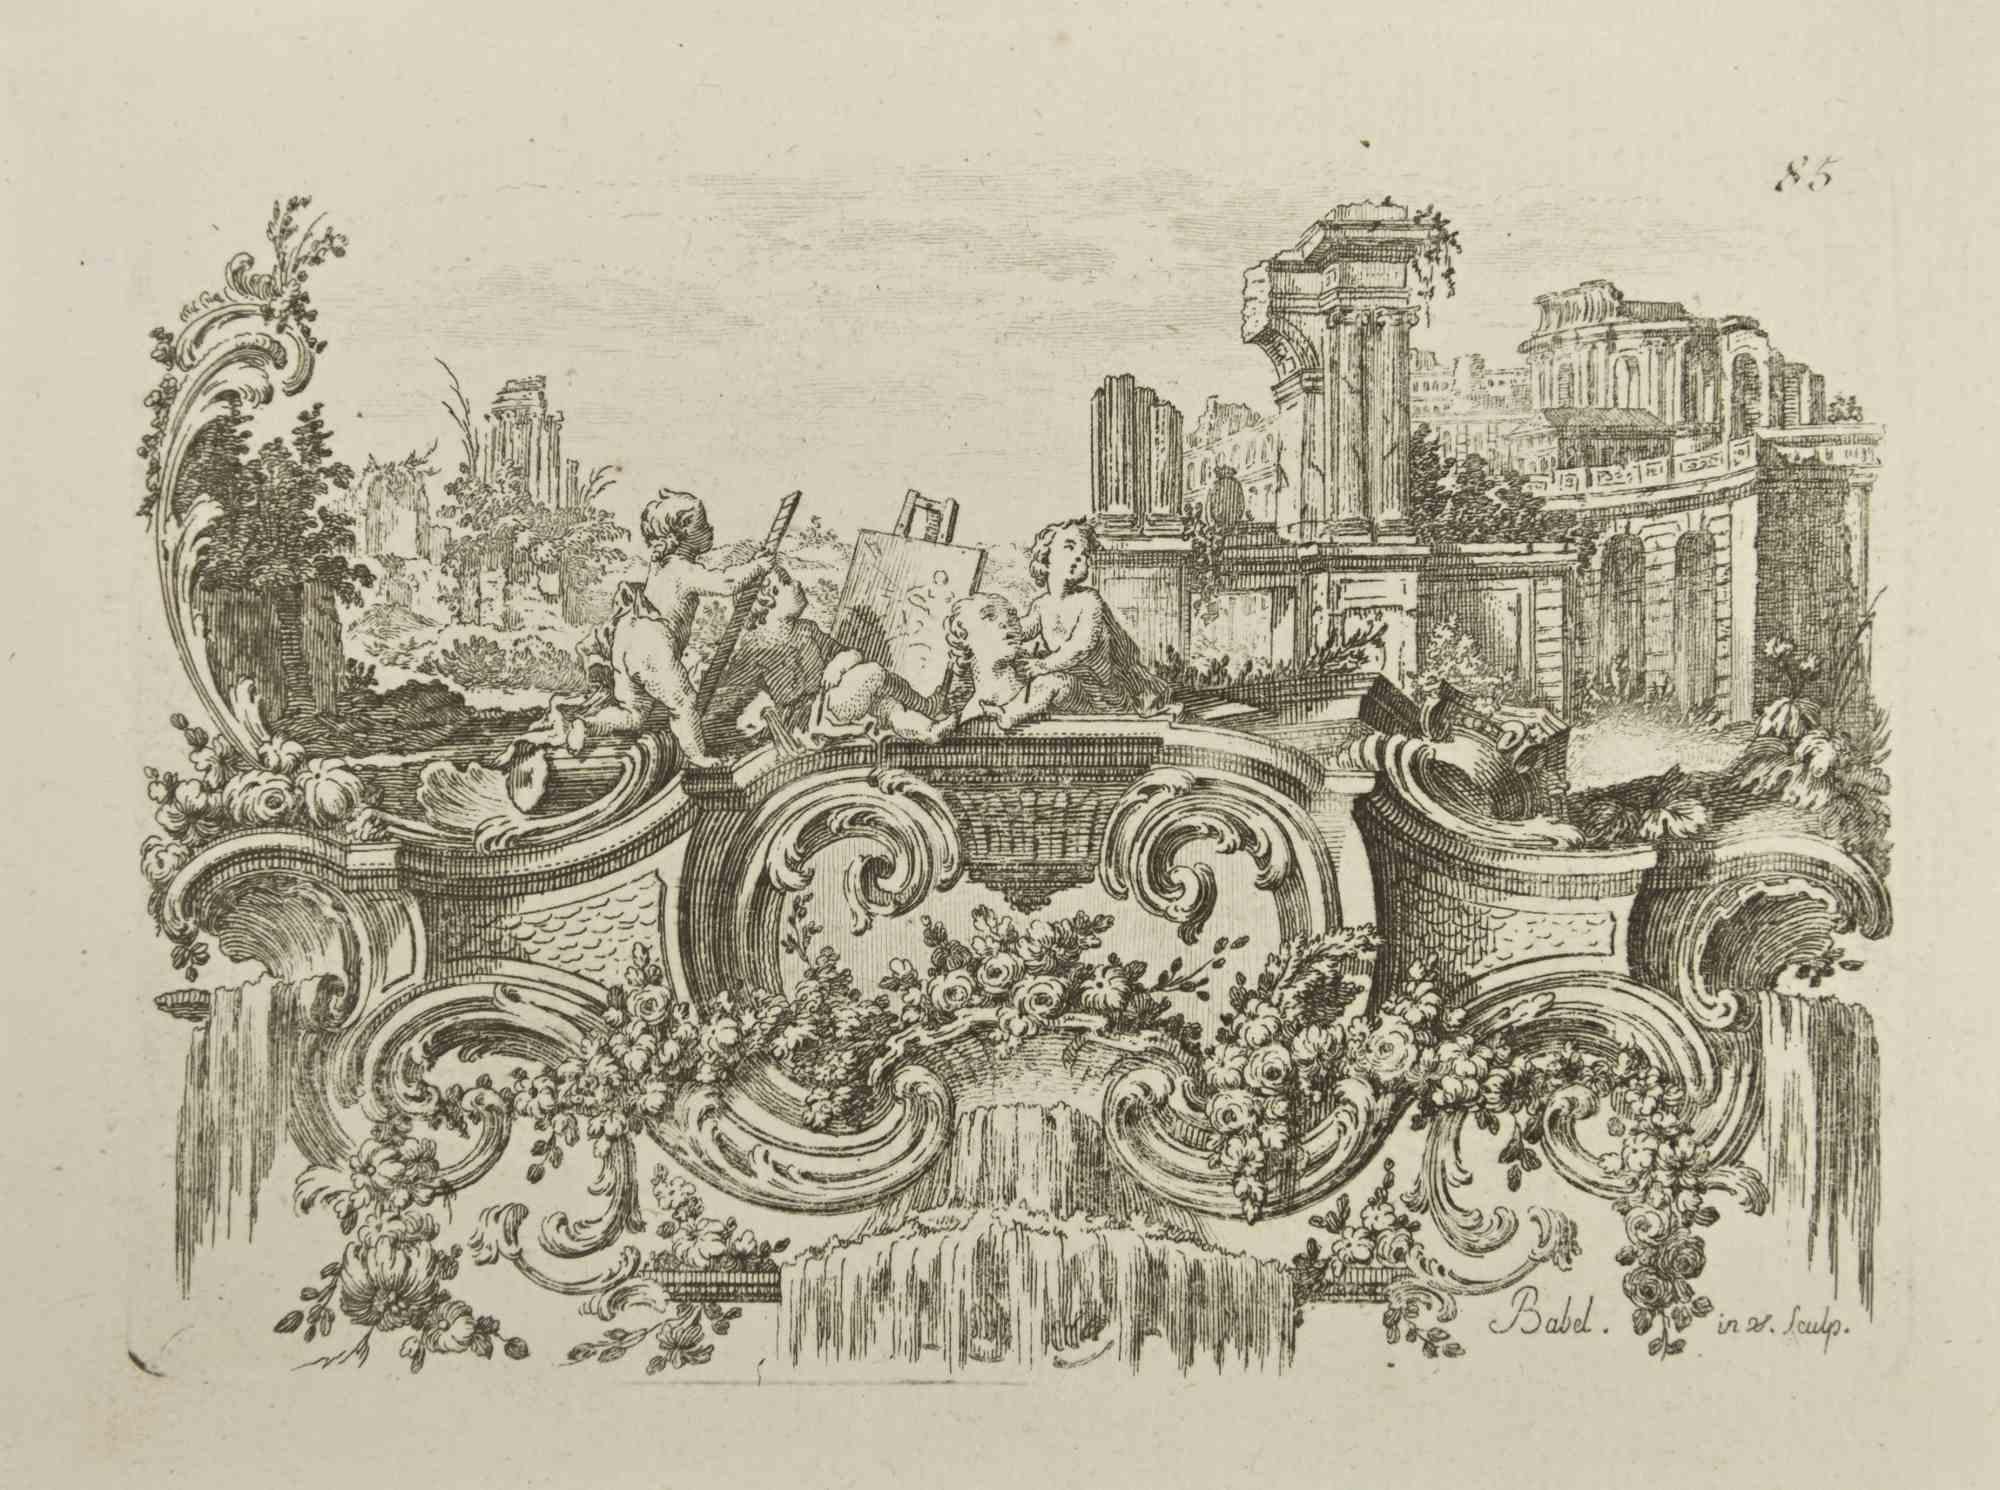 Dreamy Landscape - Etching by Pierre-Edme Babel - 18th Century